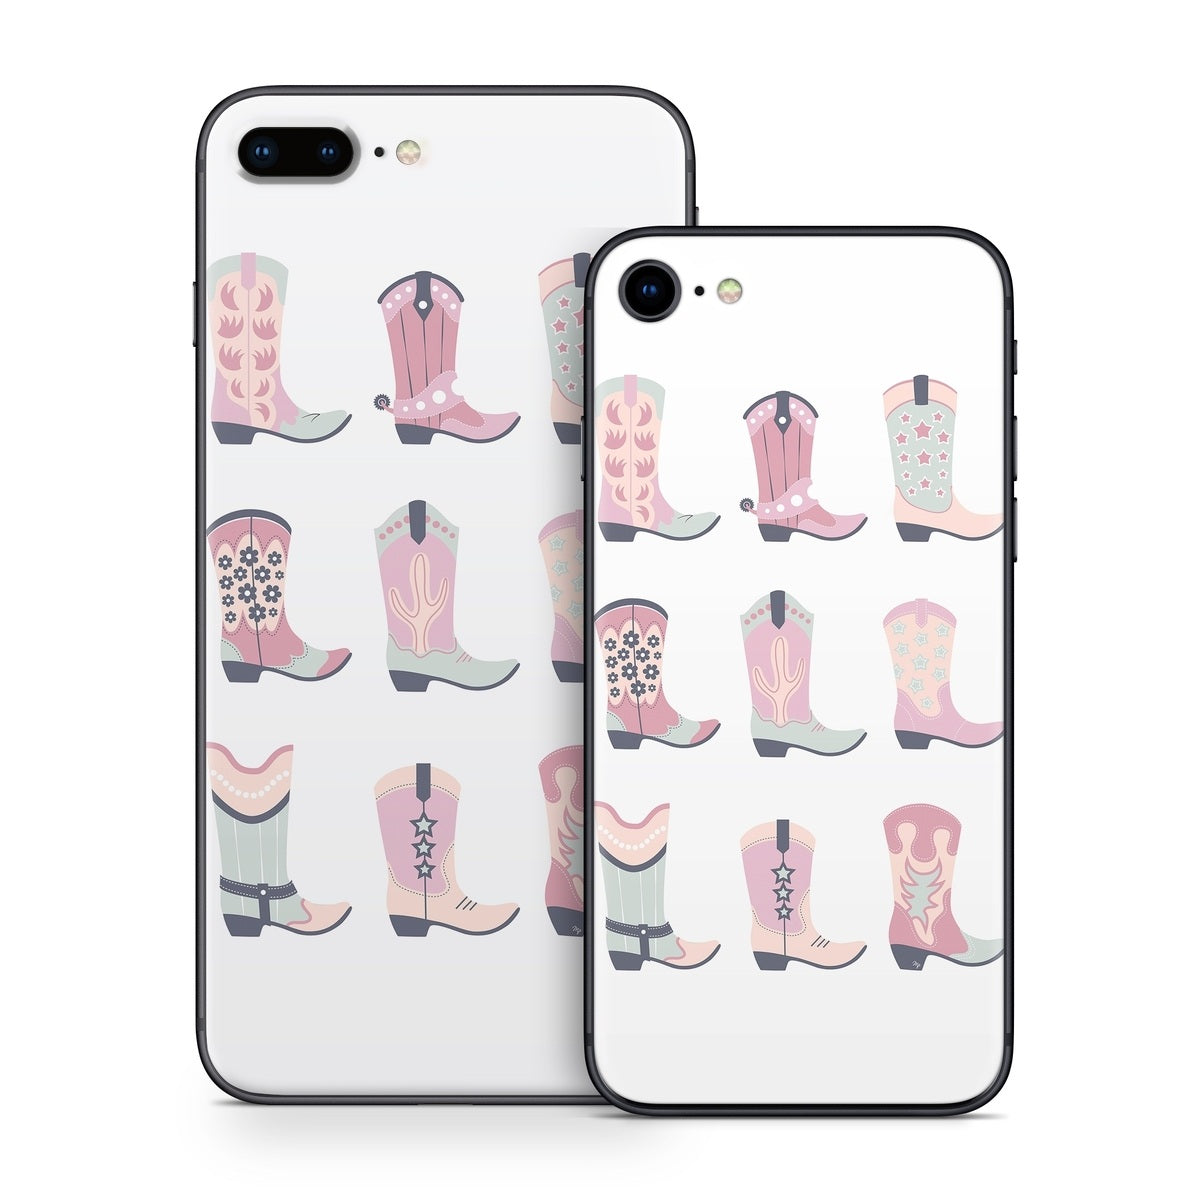 Western Girl - Apple iPhone 8 Skin